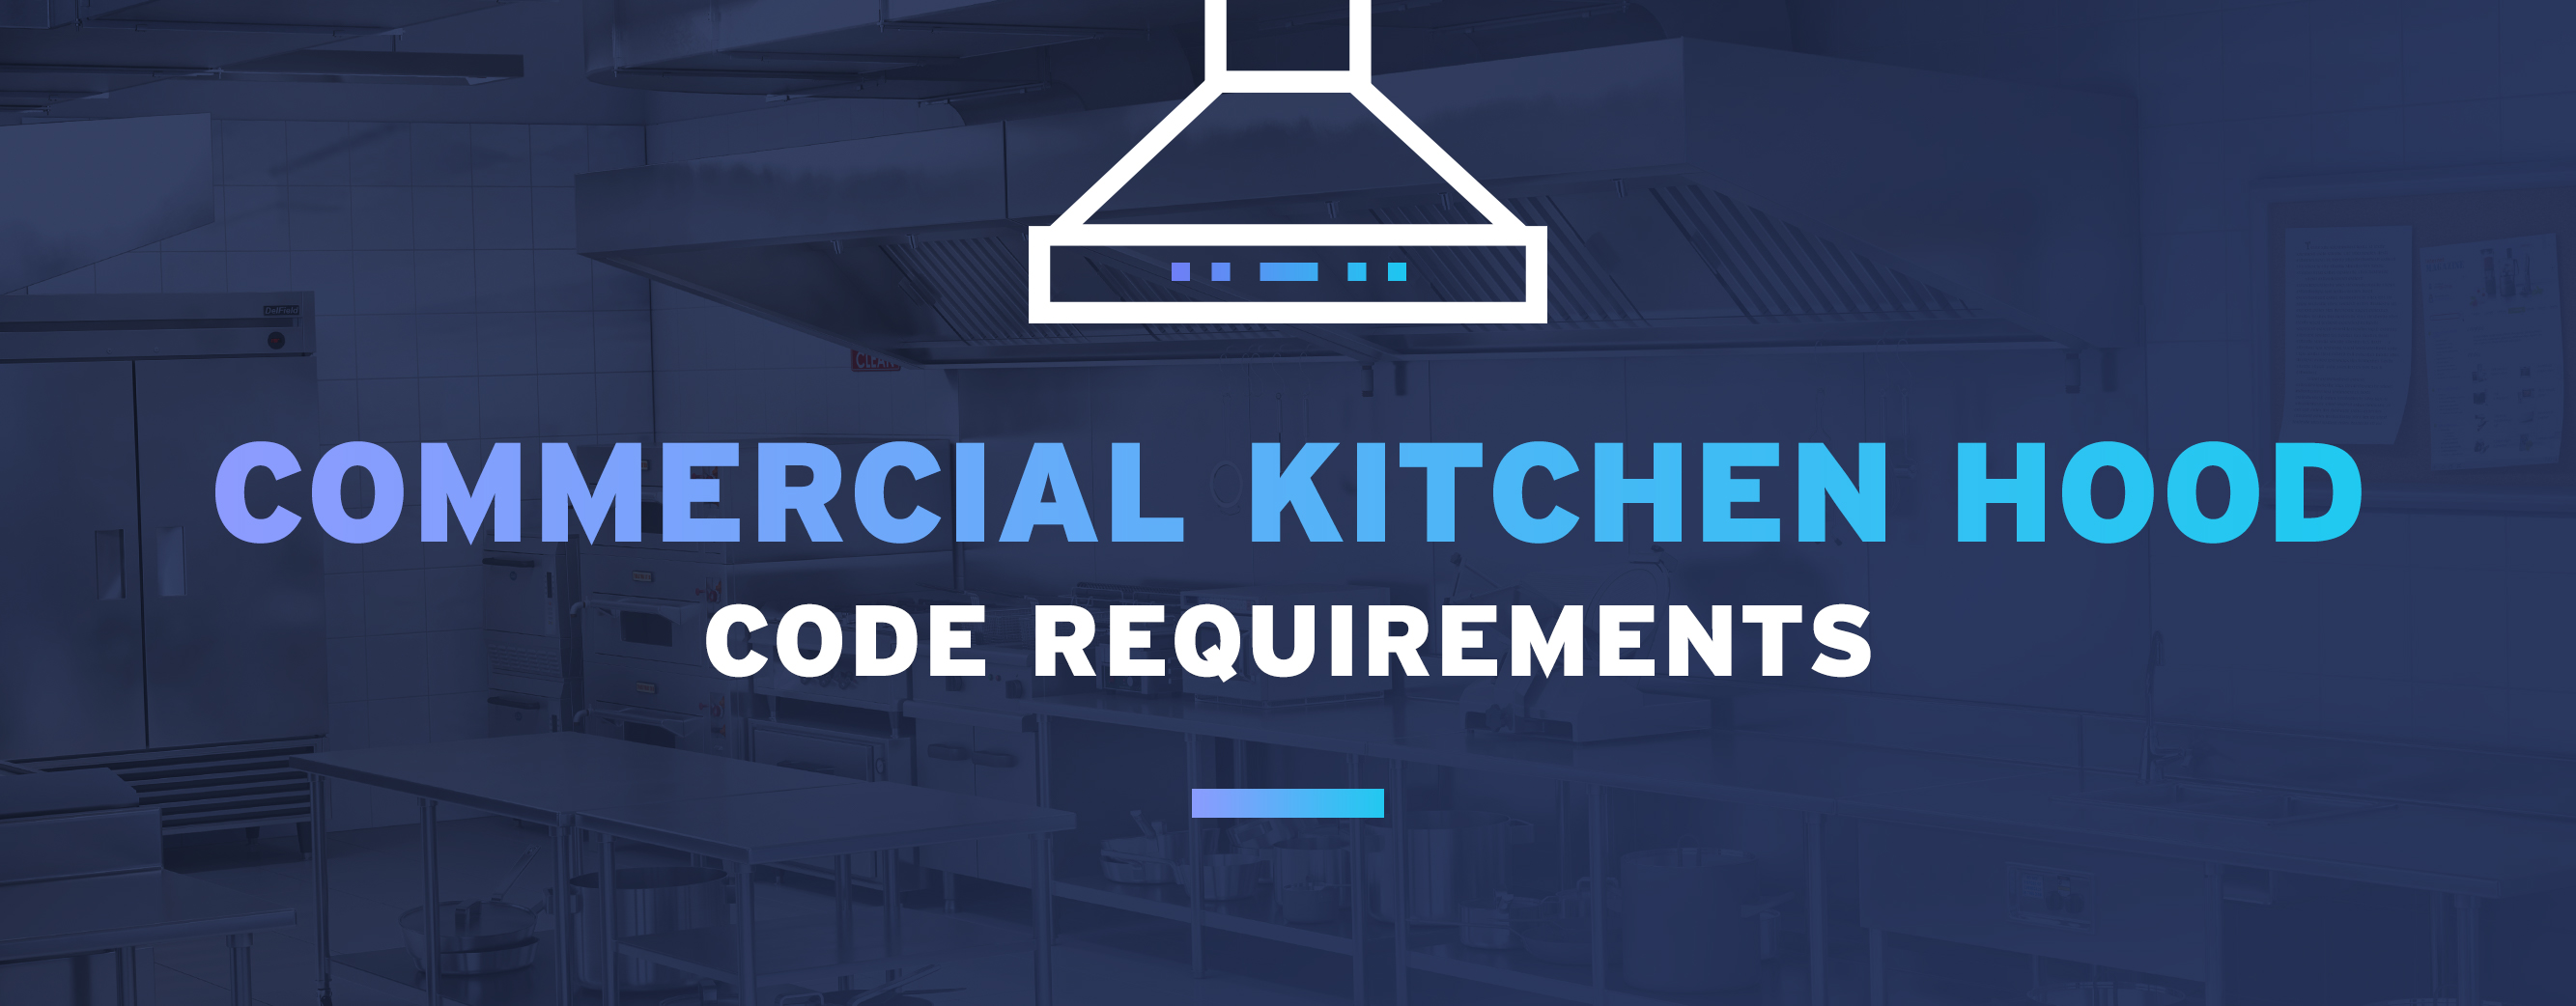 Commercial Kitchen Hood Code Requirements 